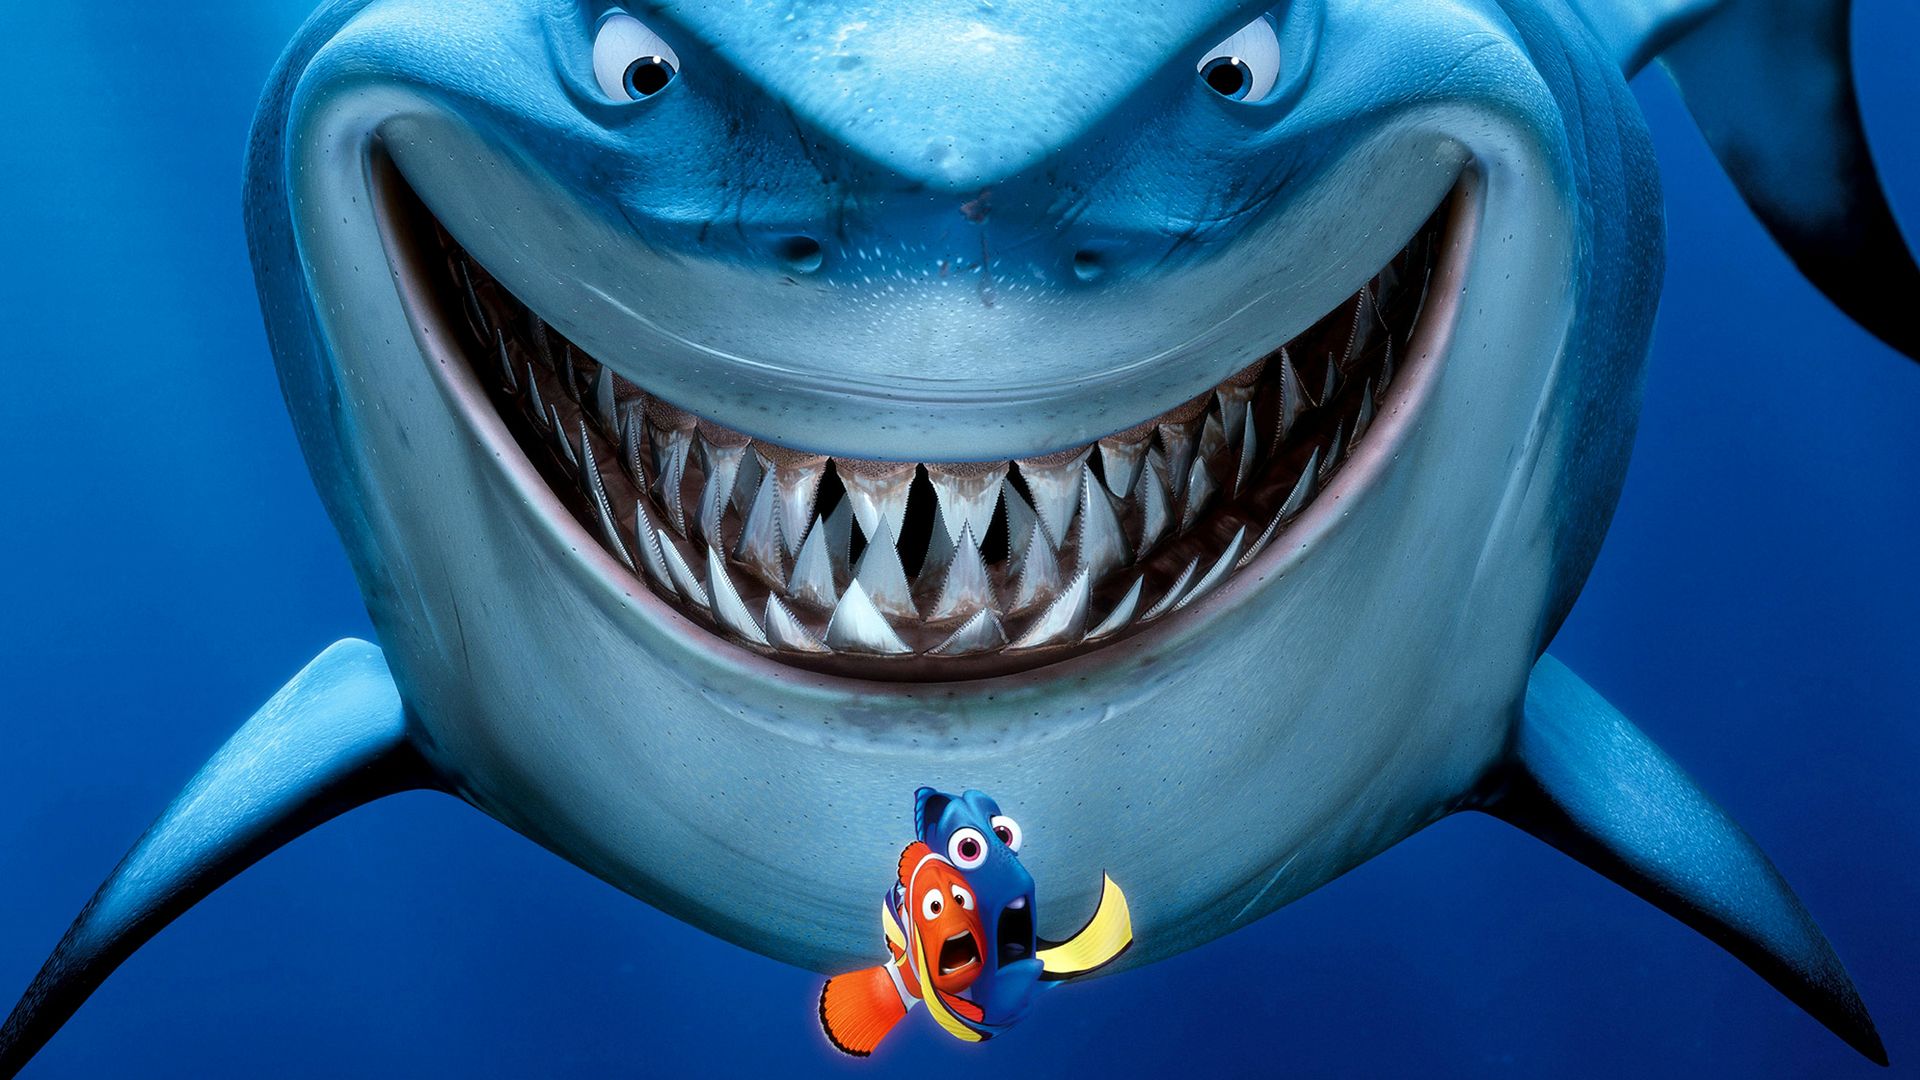 Finding Nemo Bruce Finding Nemo Dory Finding Nemo Marlin Finding Nemo 1920x1080